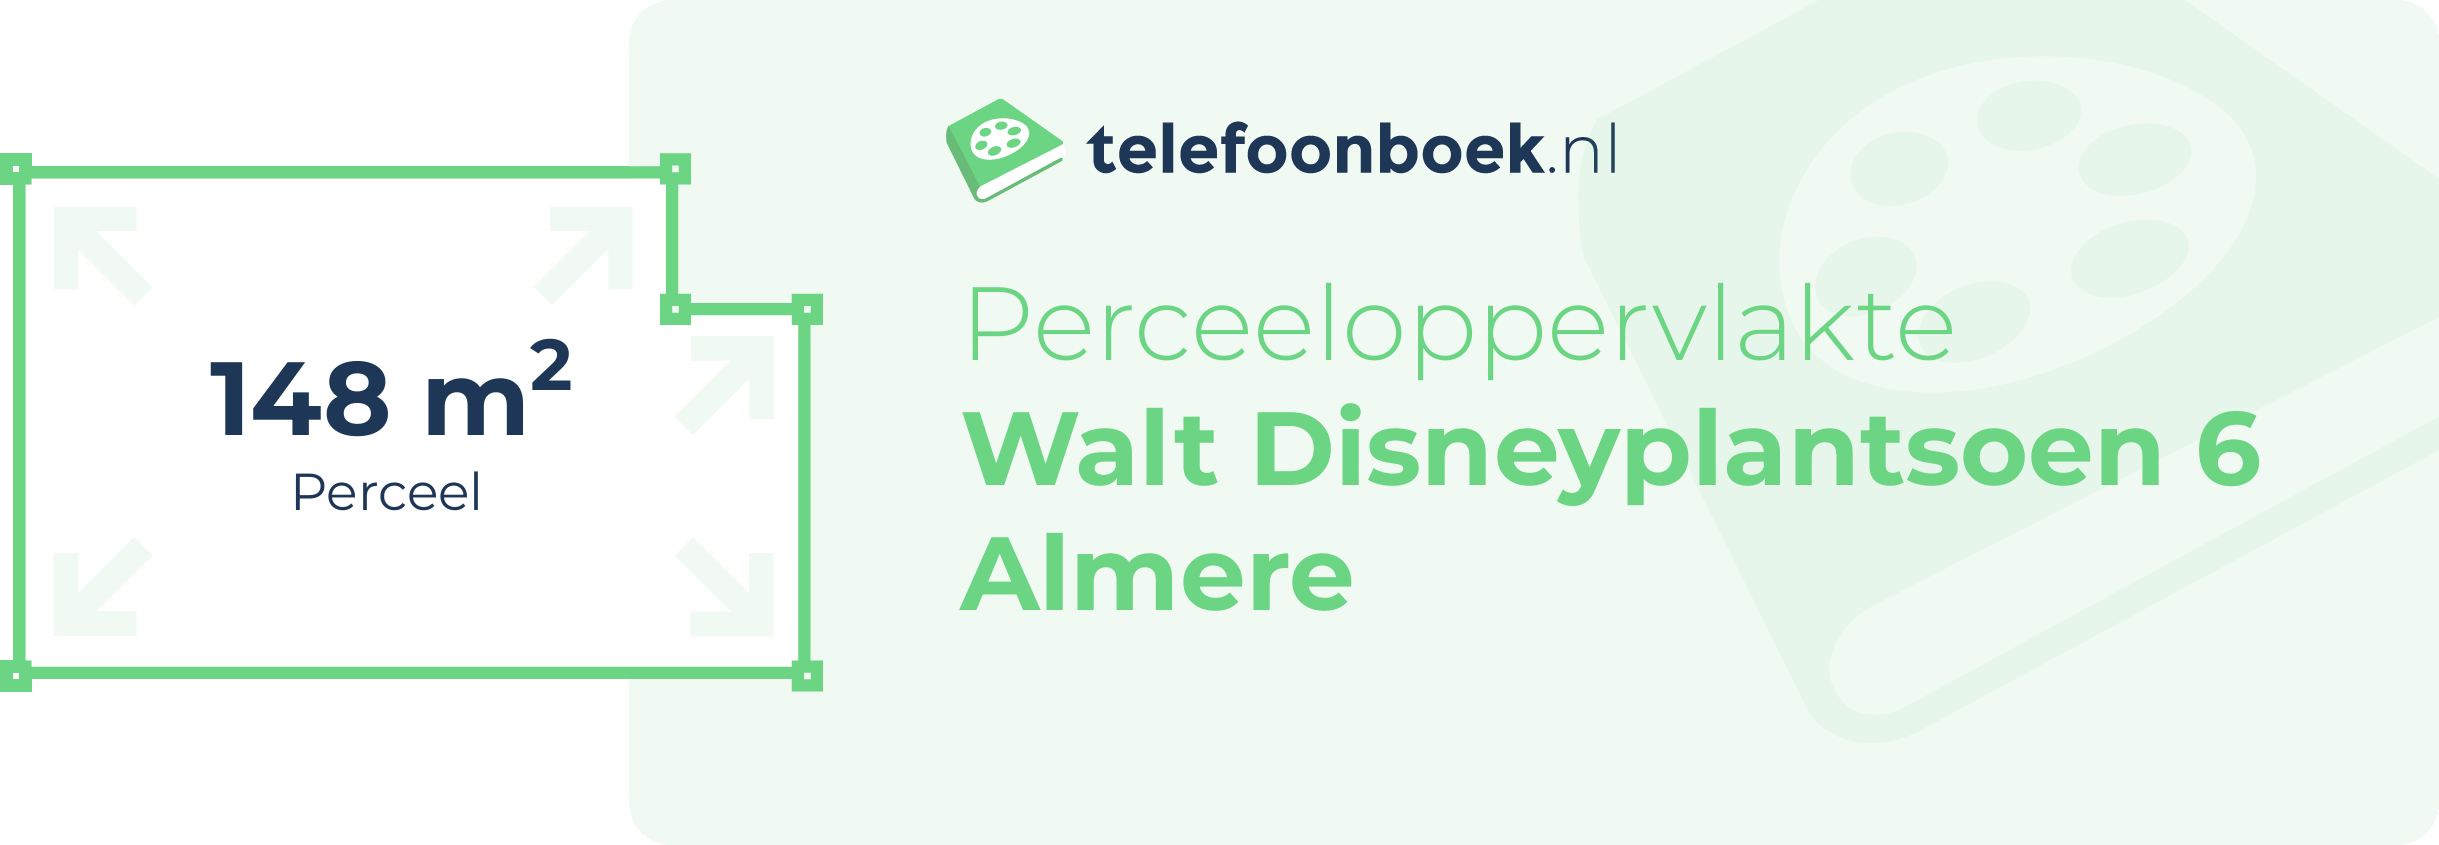 Perceeloppervlakte Walt Disneyplantsoen 6 Almere